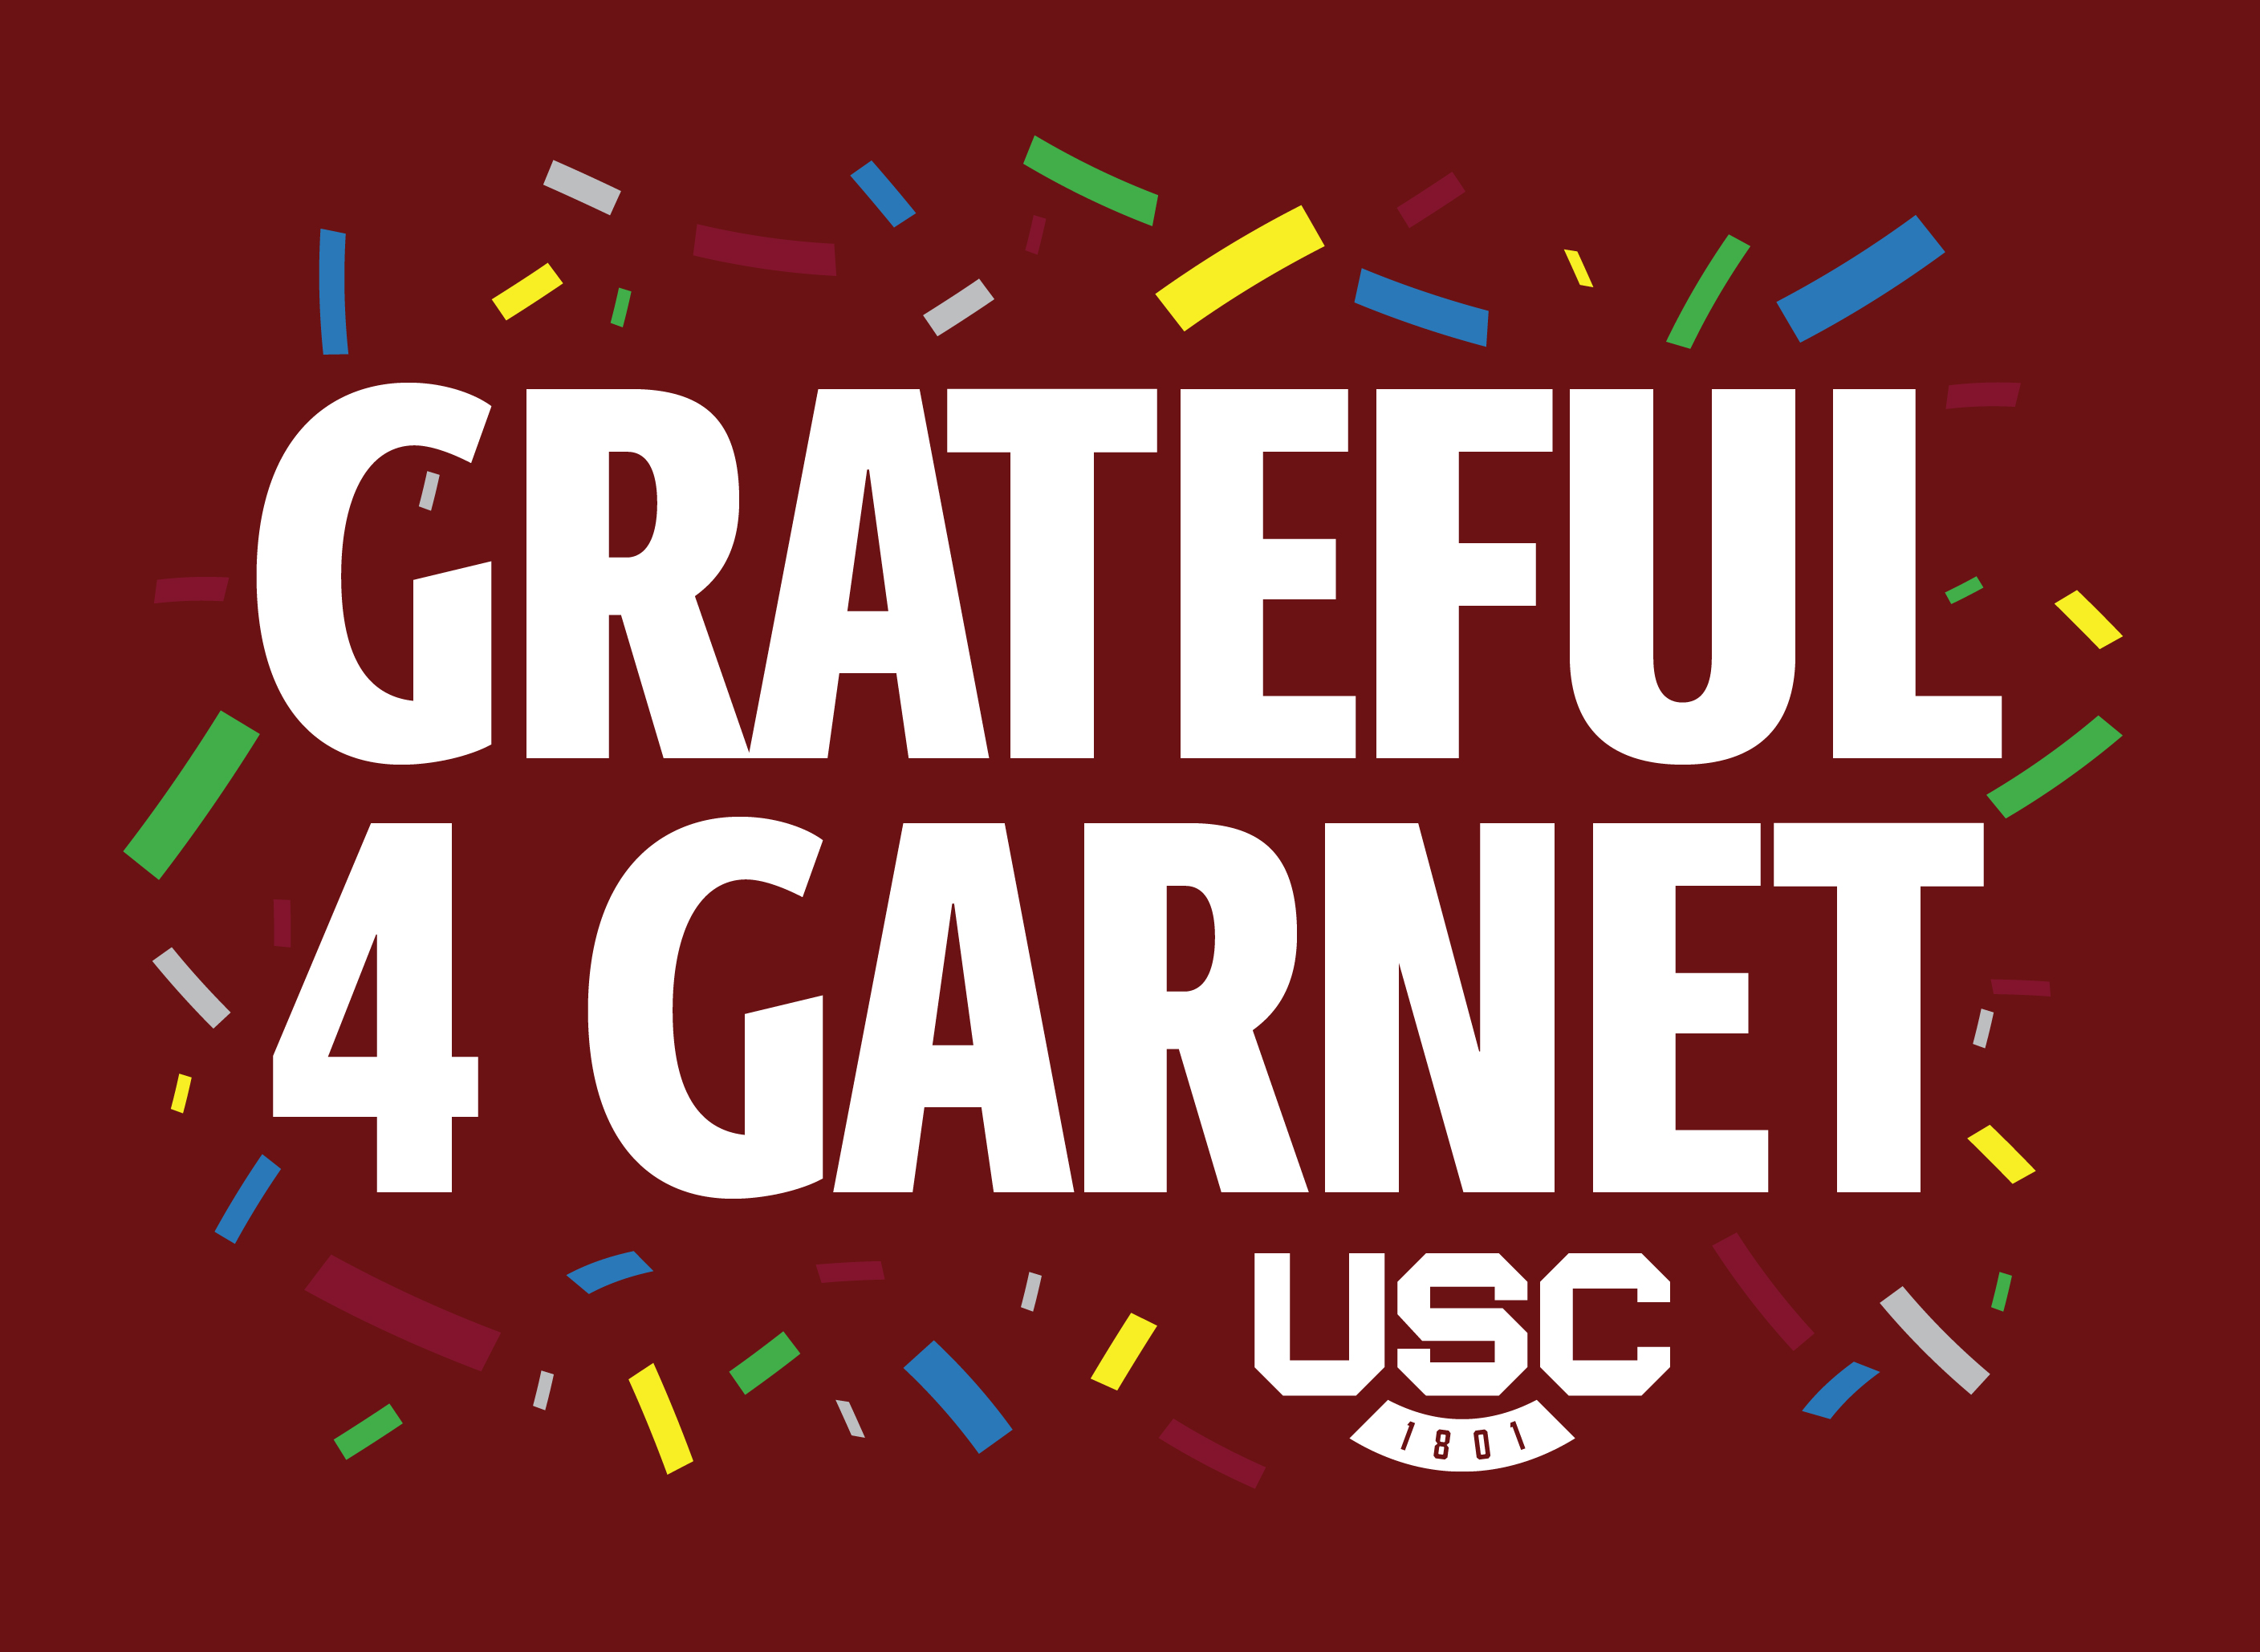 Grateful for Garnet USC 1801 logo with confetti